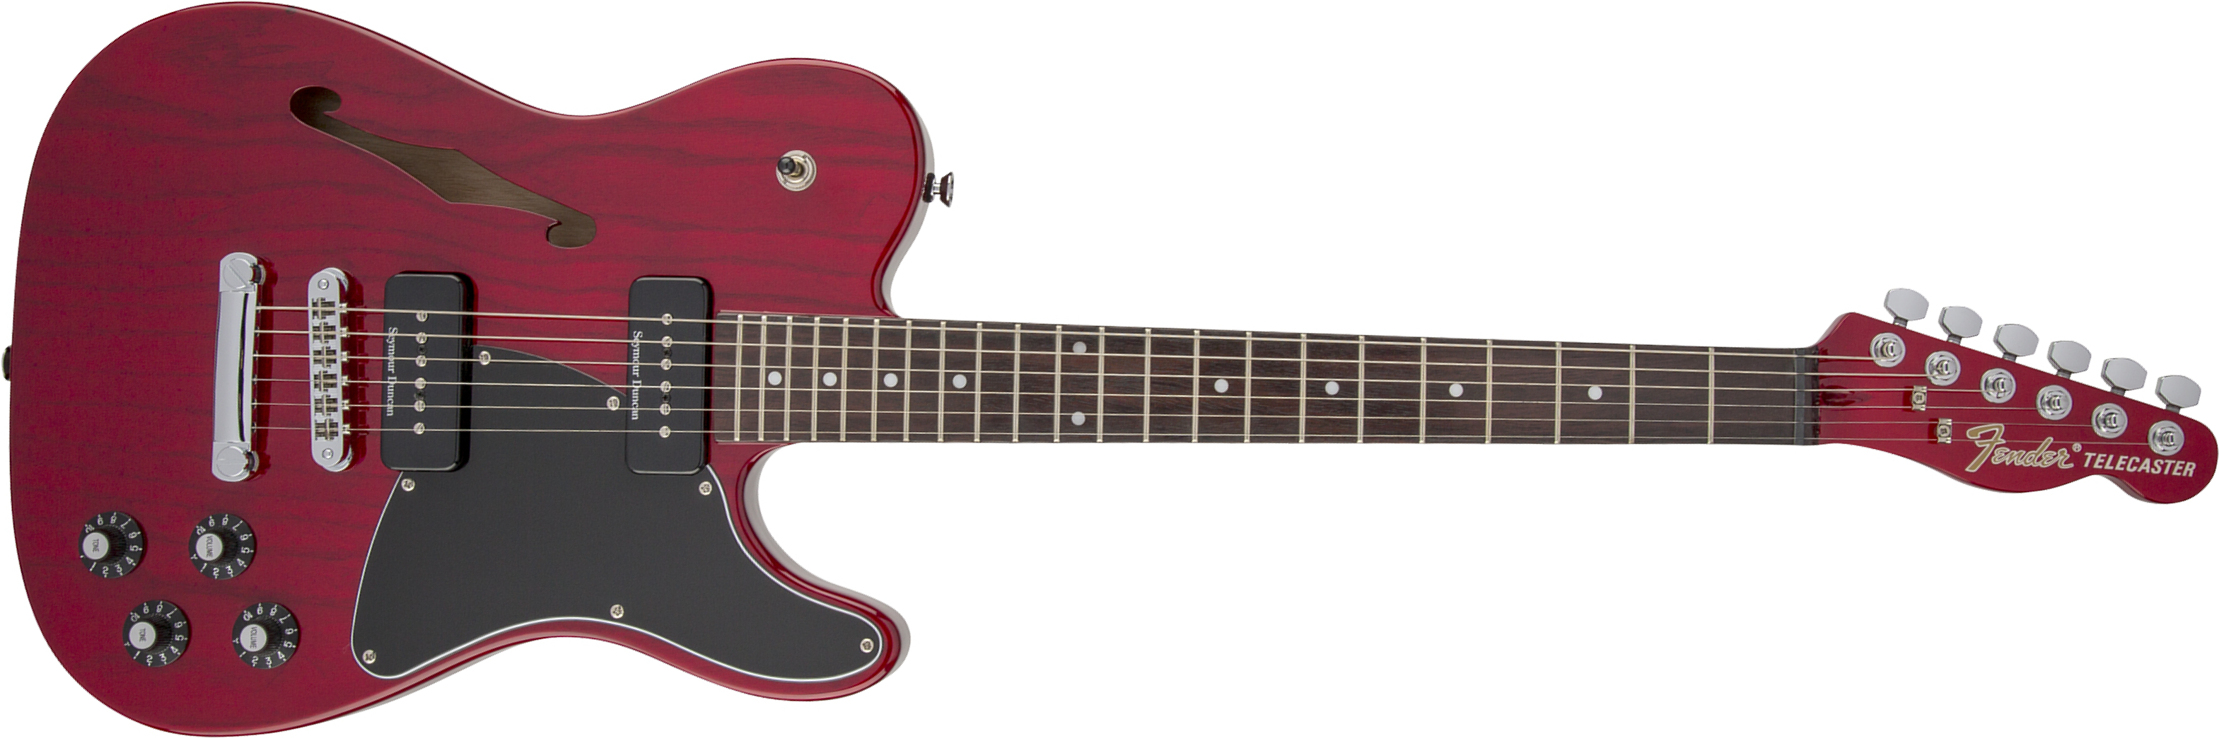 Fender Jim Adkins Tele Ja-90 Mex Signature 2p90 Lau - Crimson Red Transparent - Televorm elektrische gitaar - Main picture